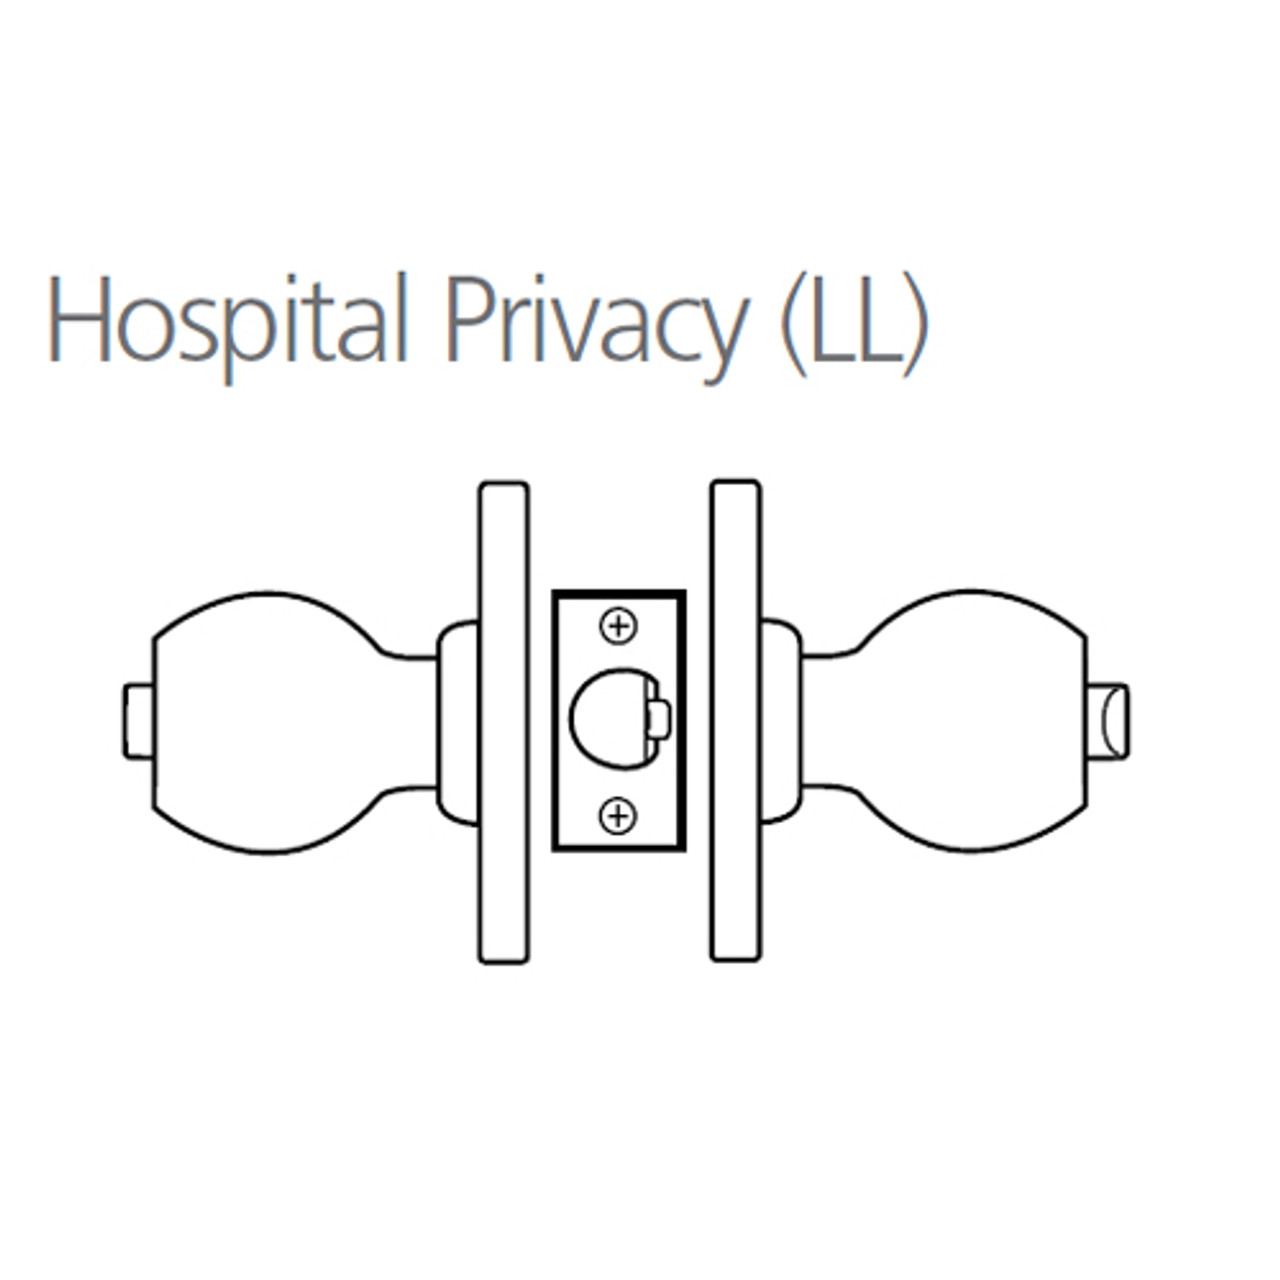 8K30LL4ASTK626 Best 8K Series Hospital Privacy Heavy Duty Cylindrical Knob Locks with Round Style in Satin Chrome